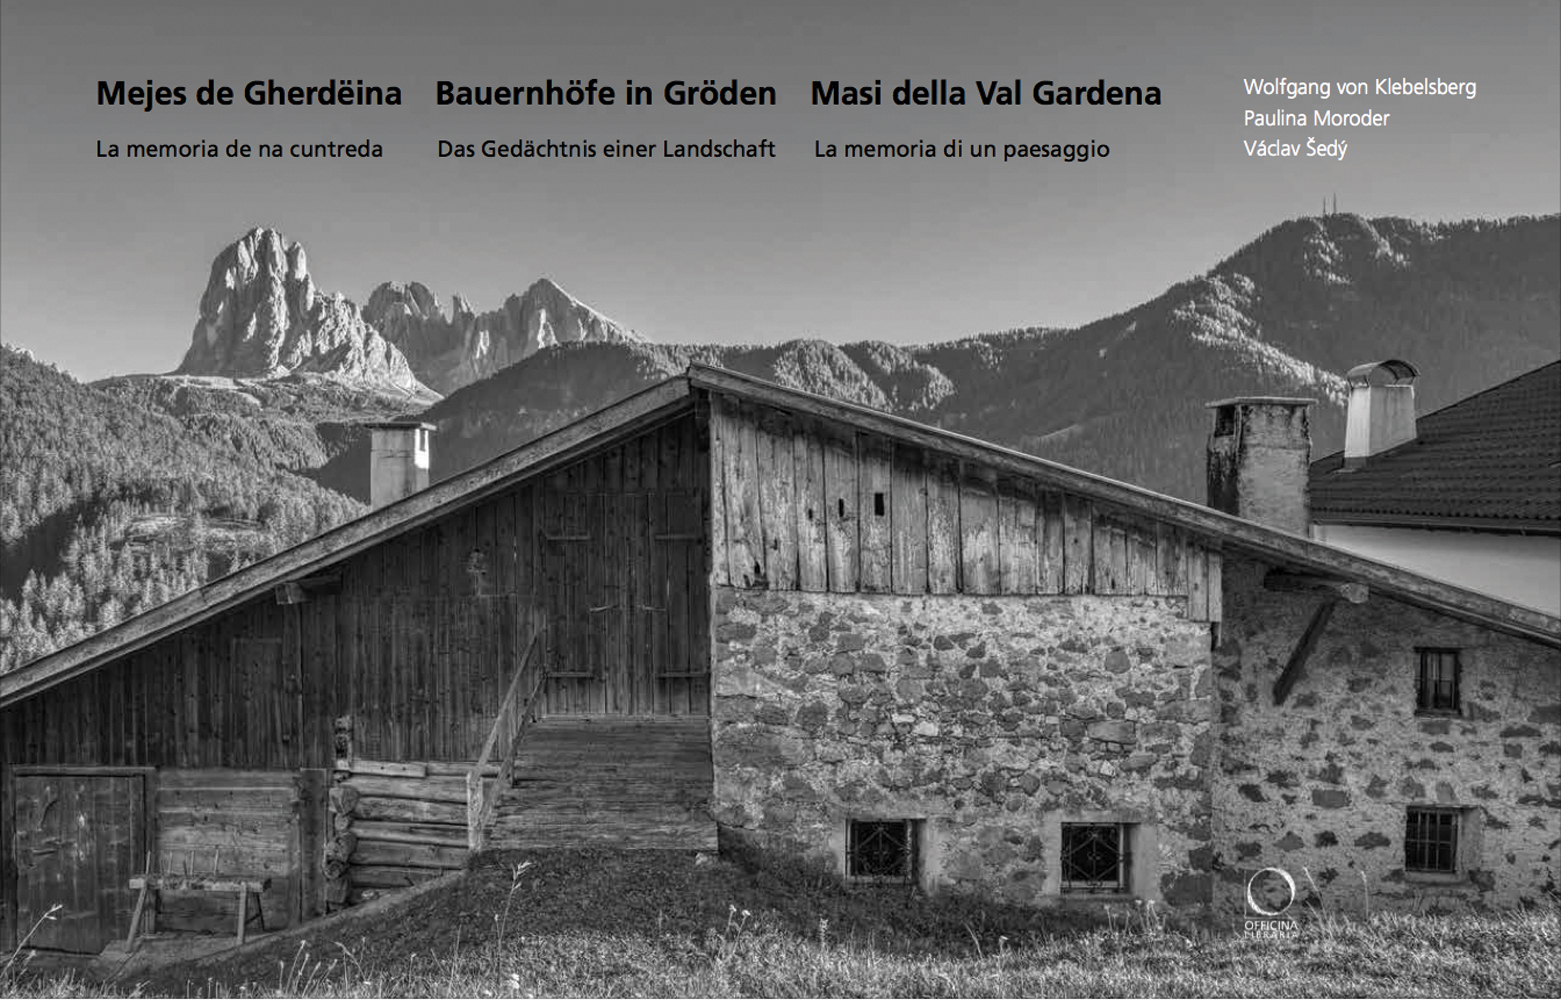 Tritone photo of Farm building in Alpine landscape Mejes de Gherdeina Bauernhoefe in Groeden Masi della Val Gardena in black font above.